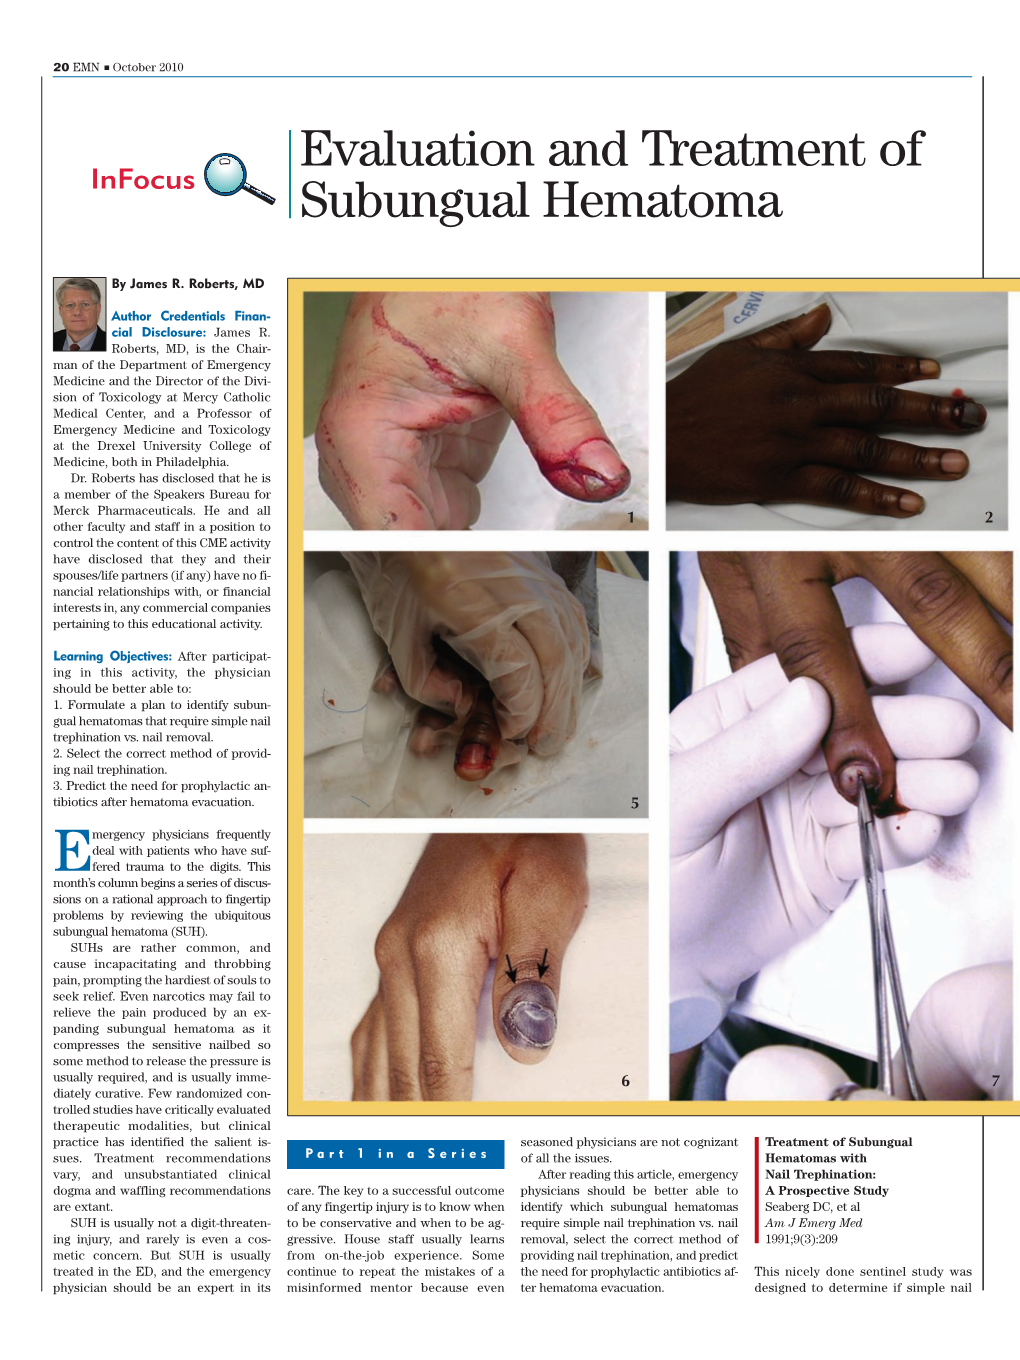 Evaluation and Treatment of Subungual Hematoma